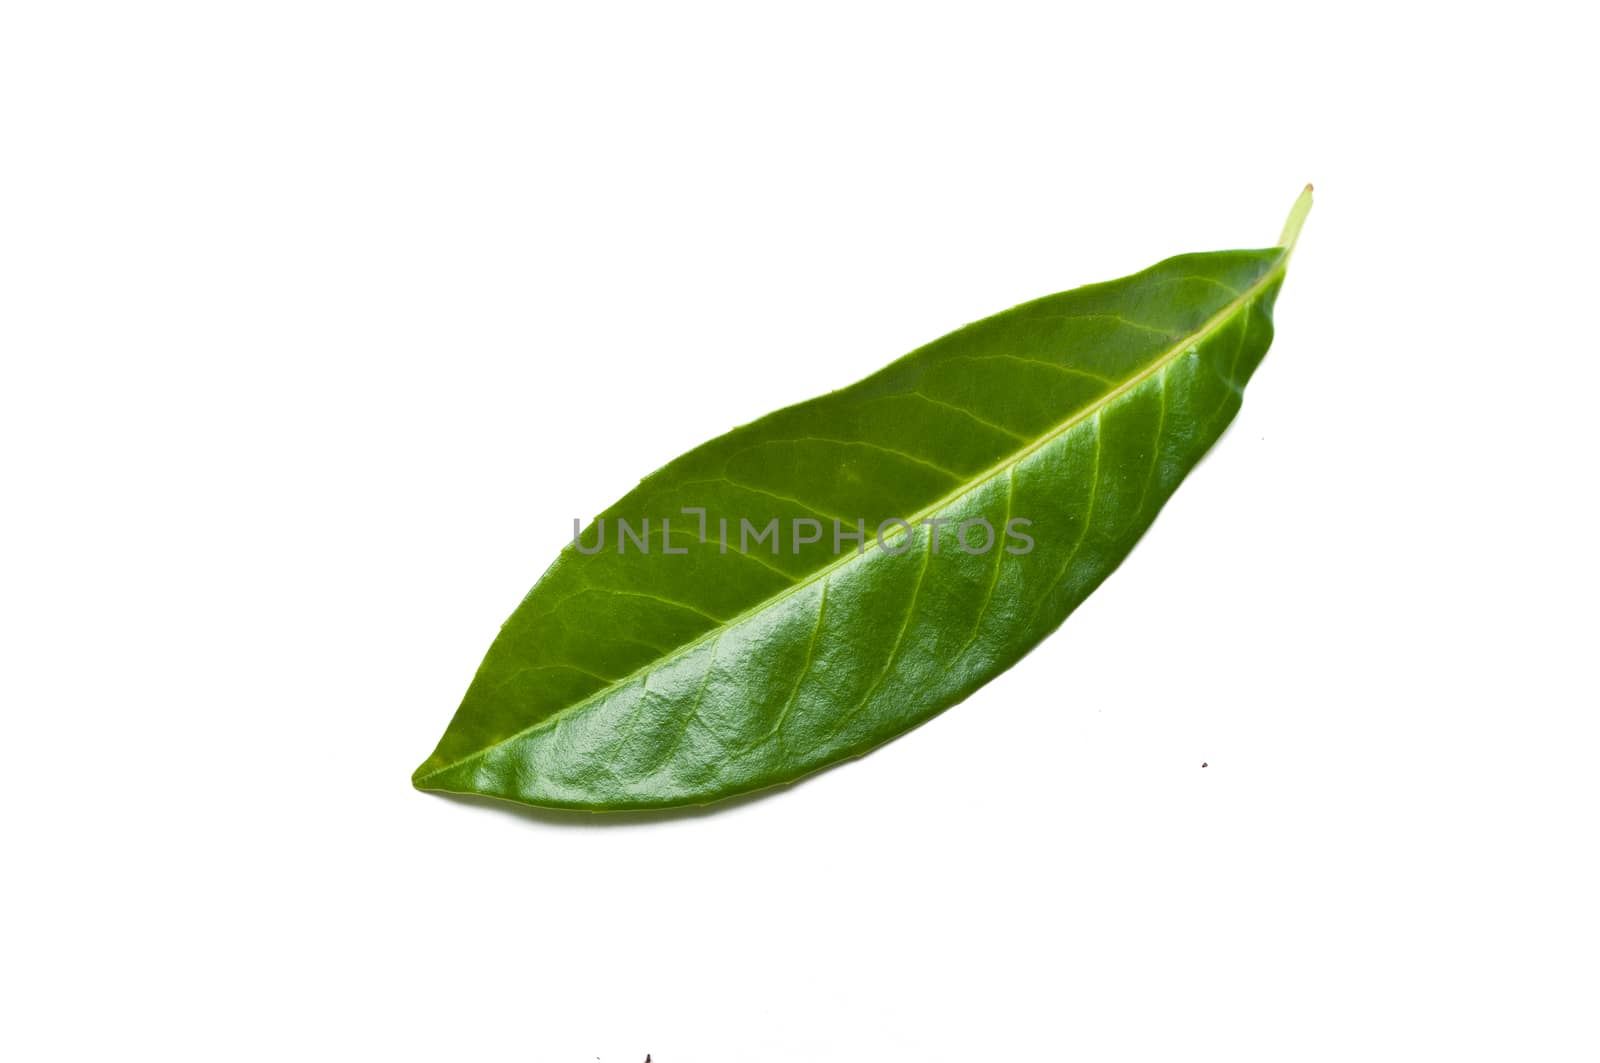 Isolated leaf of   prunus laurocerasus rotundifolia on white background by NeydtStock